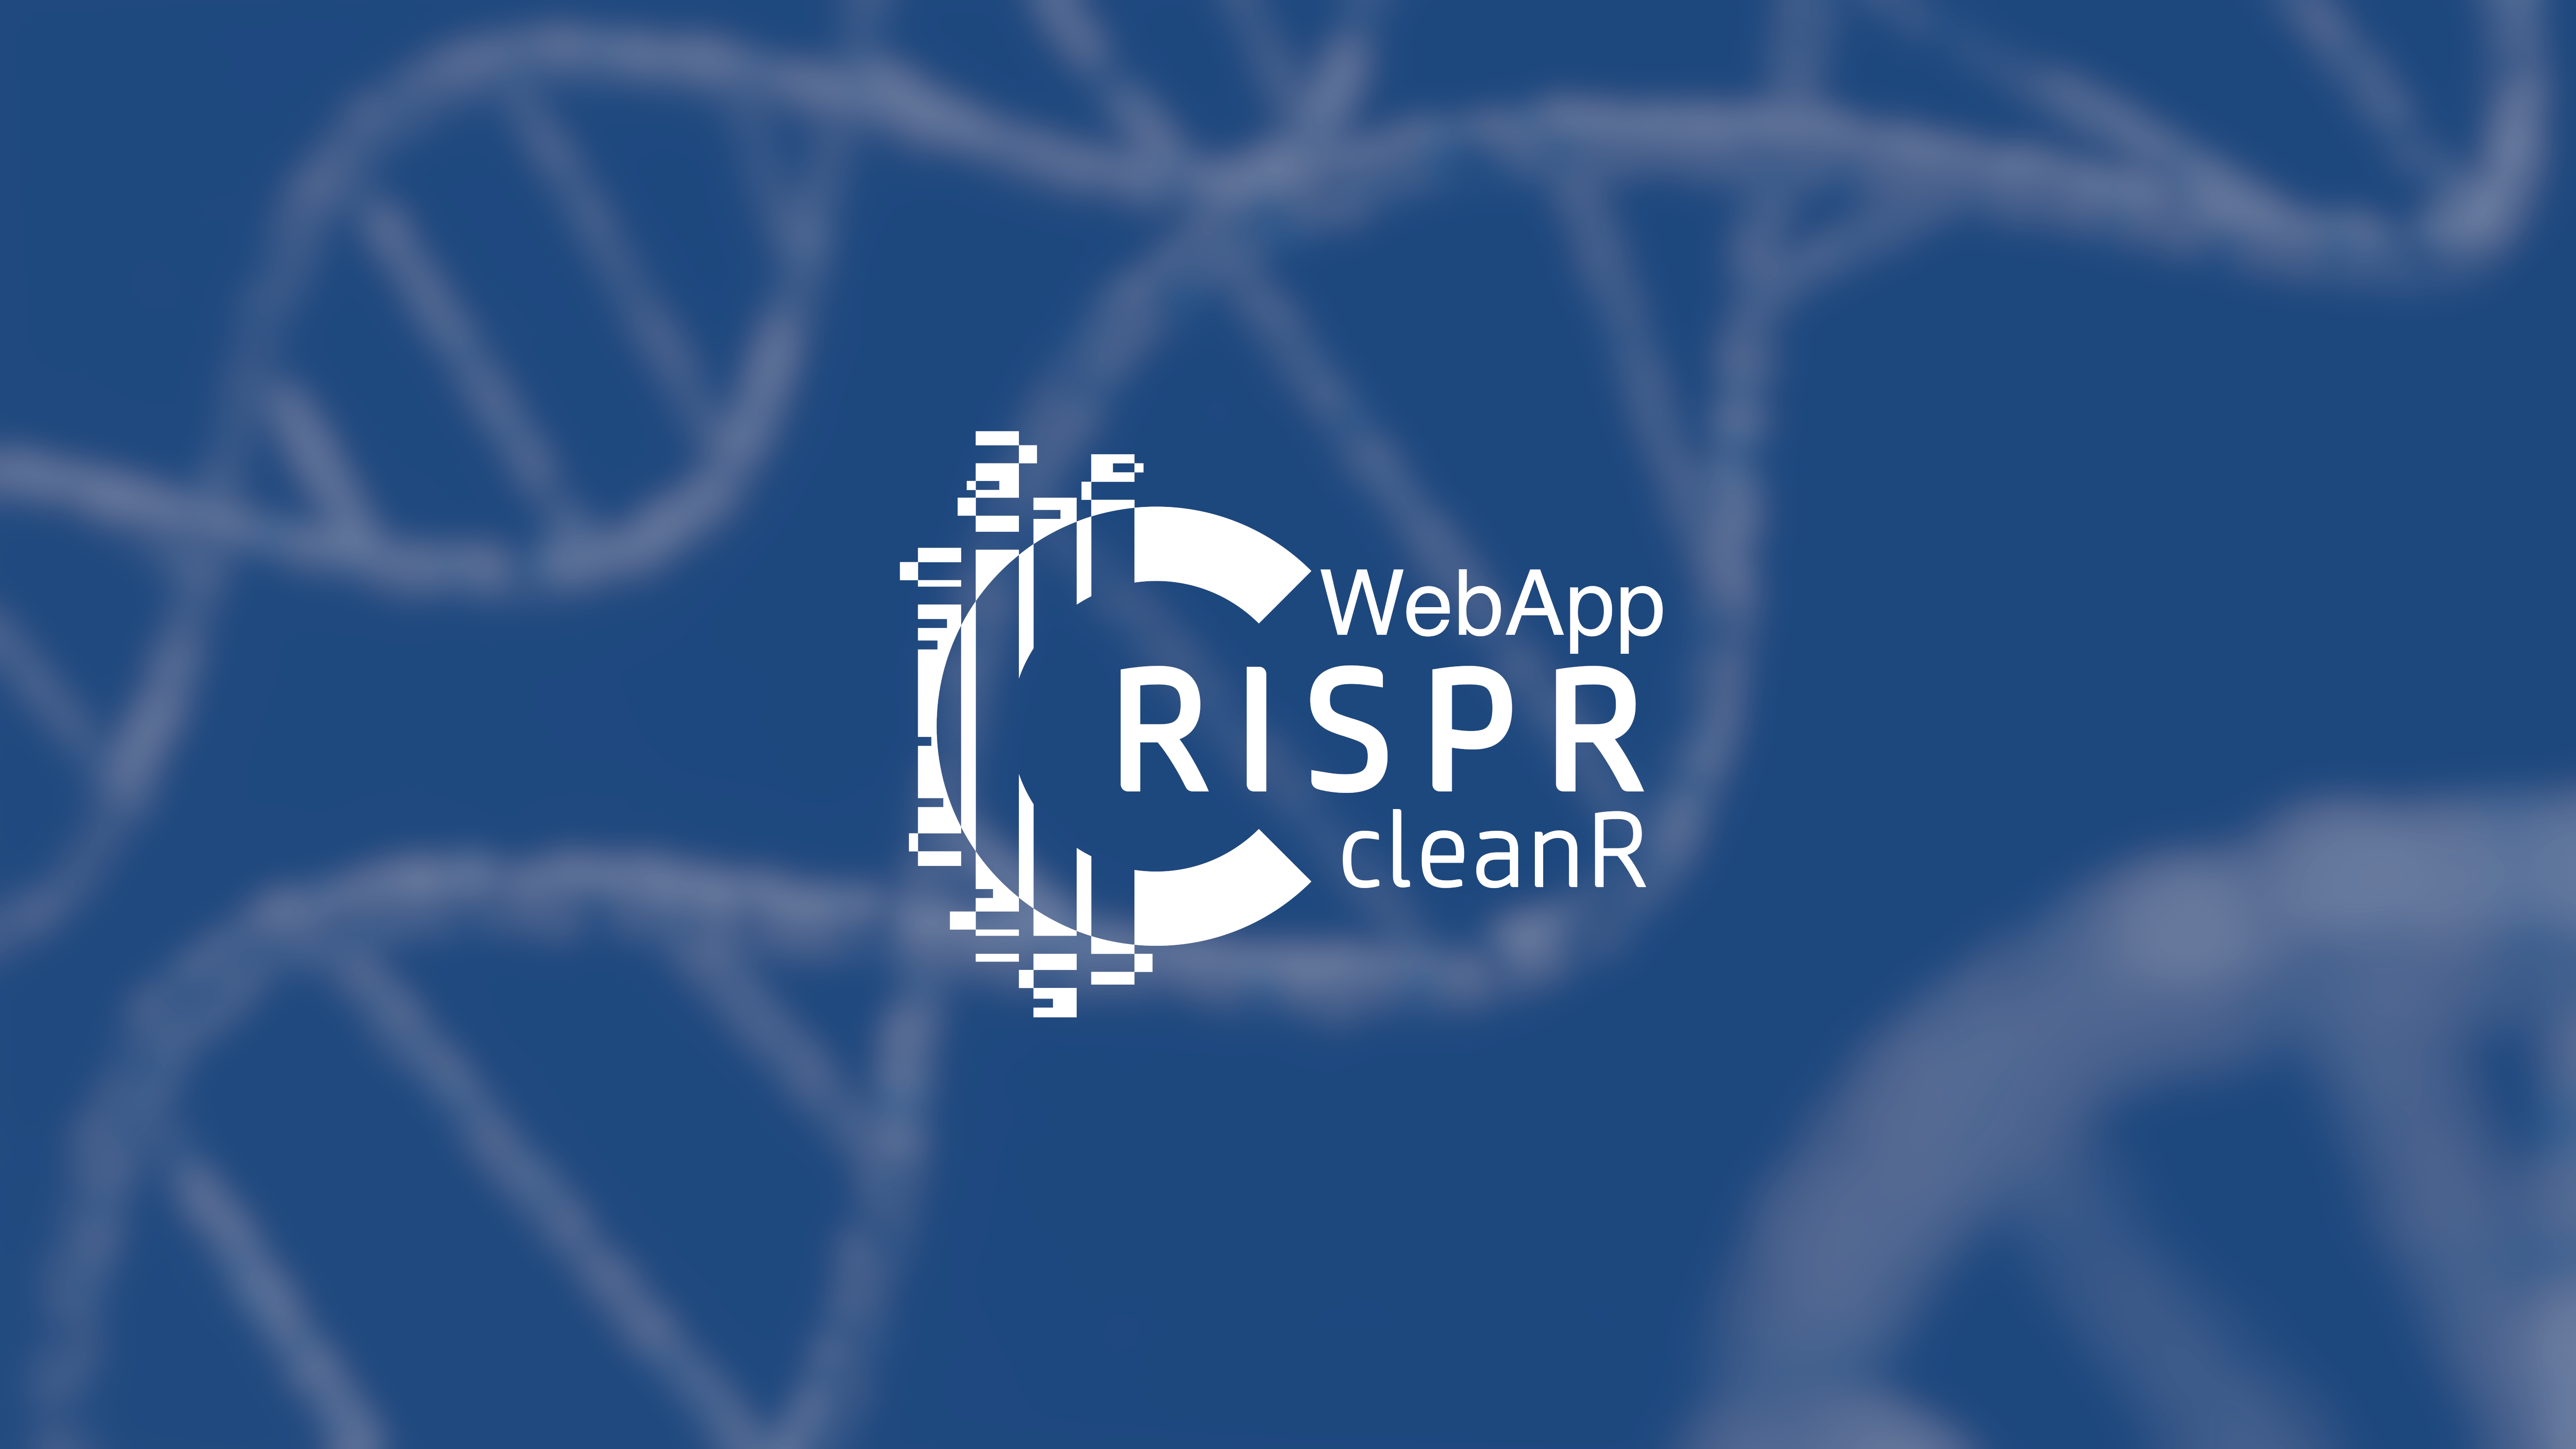 CRISPRcleanR WebApp facilita le analisi degli screening CRISPR-Cas9